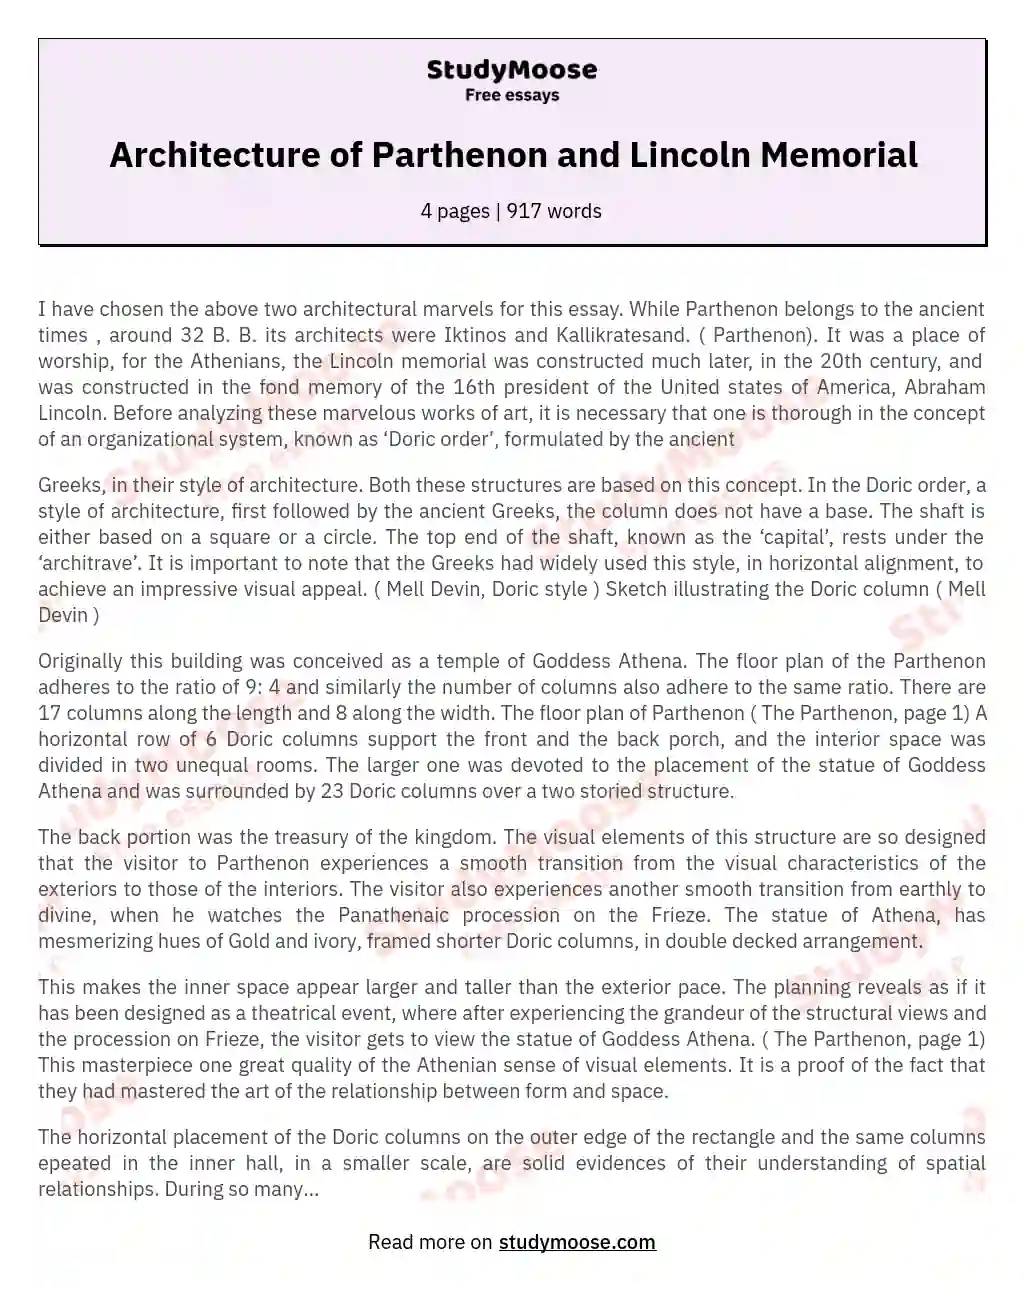 Architecture of Parthenon and Lincoln Memorial essay